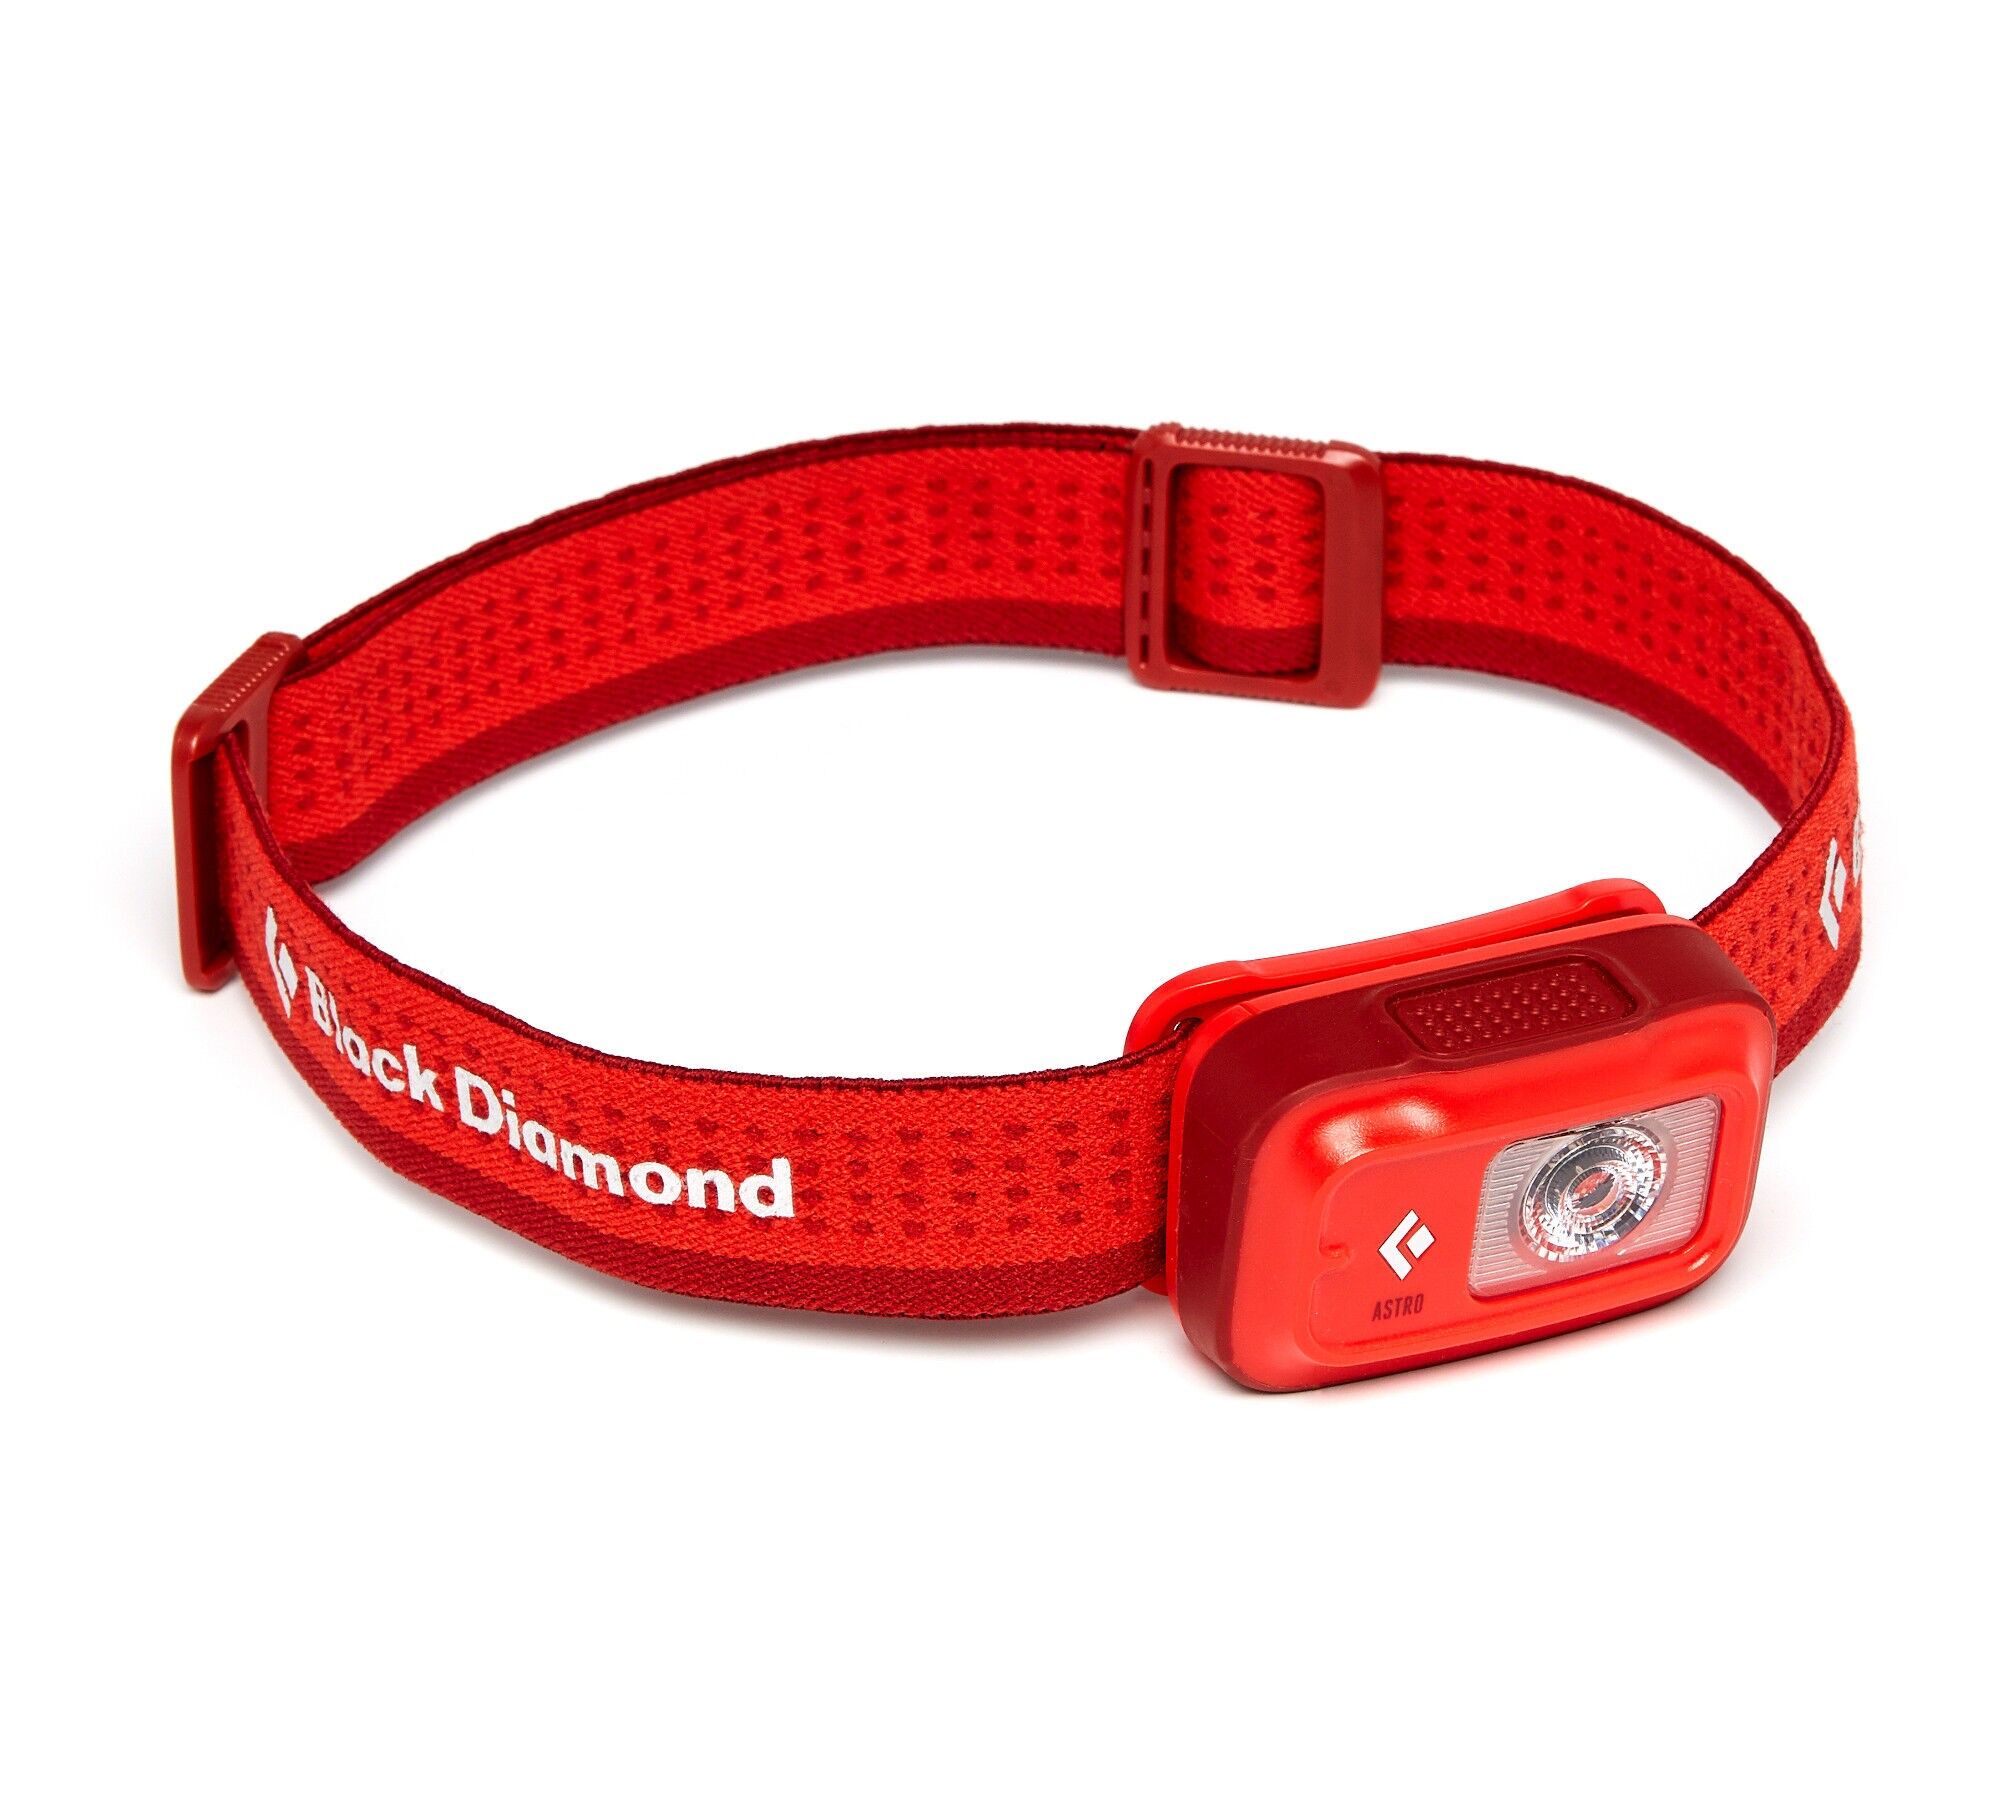 Black Diamond Astro 250 - Headlamp